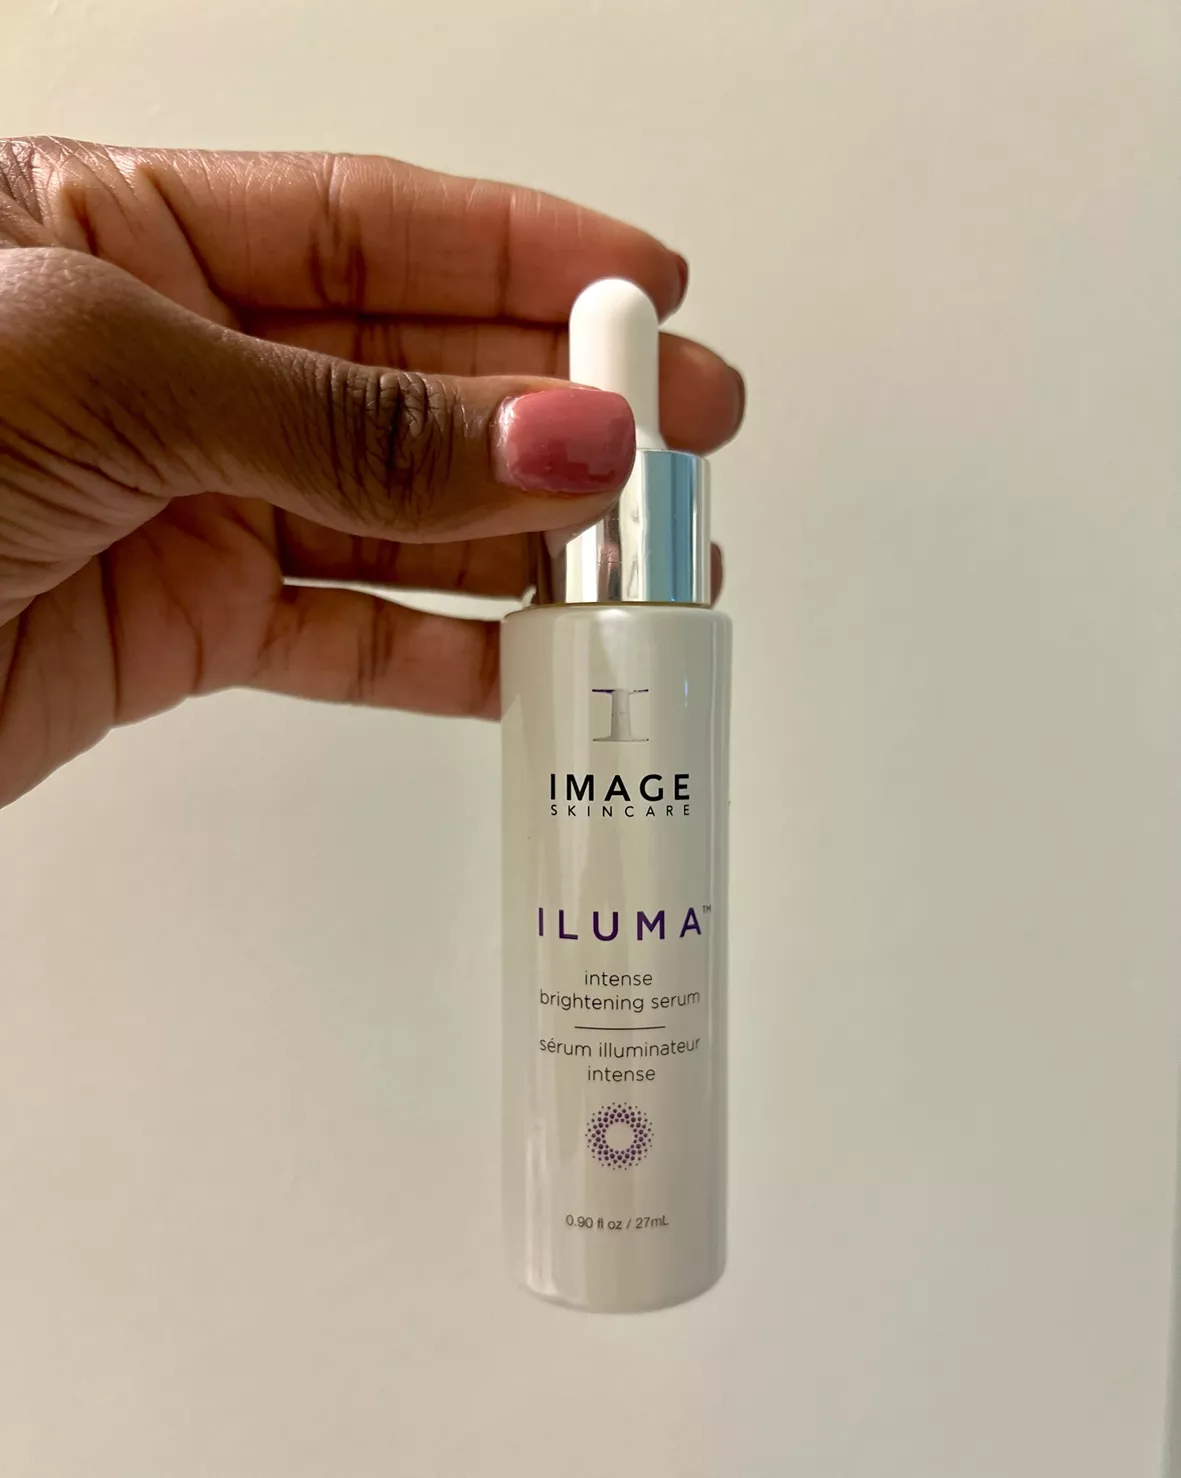 ILUMA® intense brightening serum curated on LTK